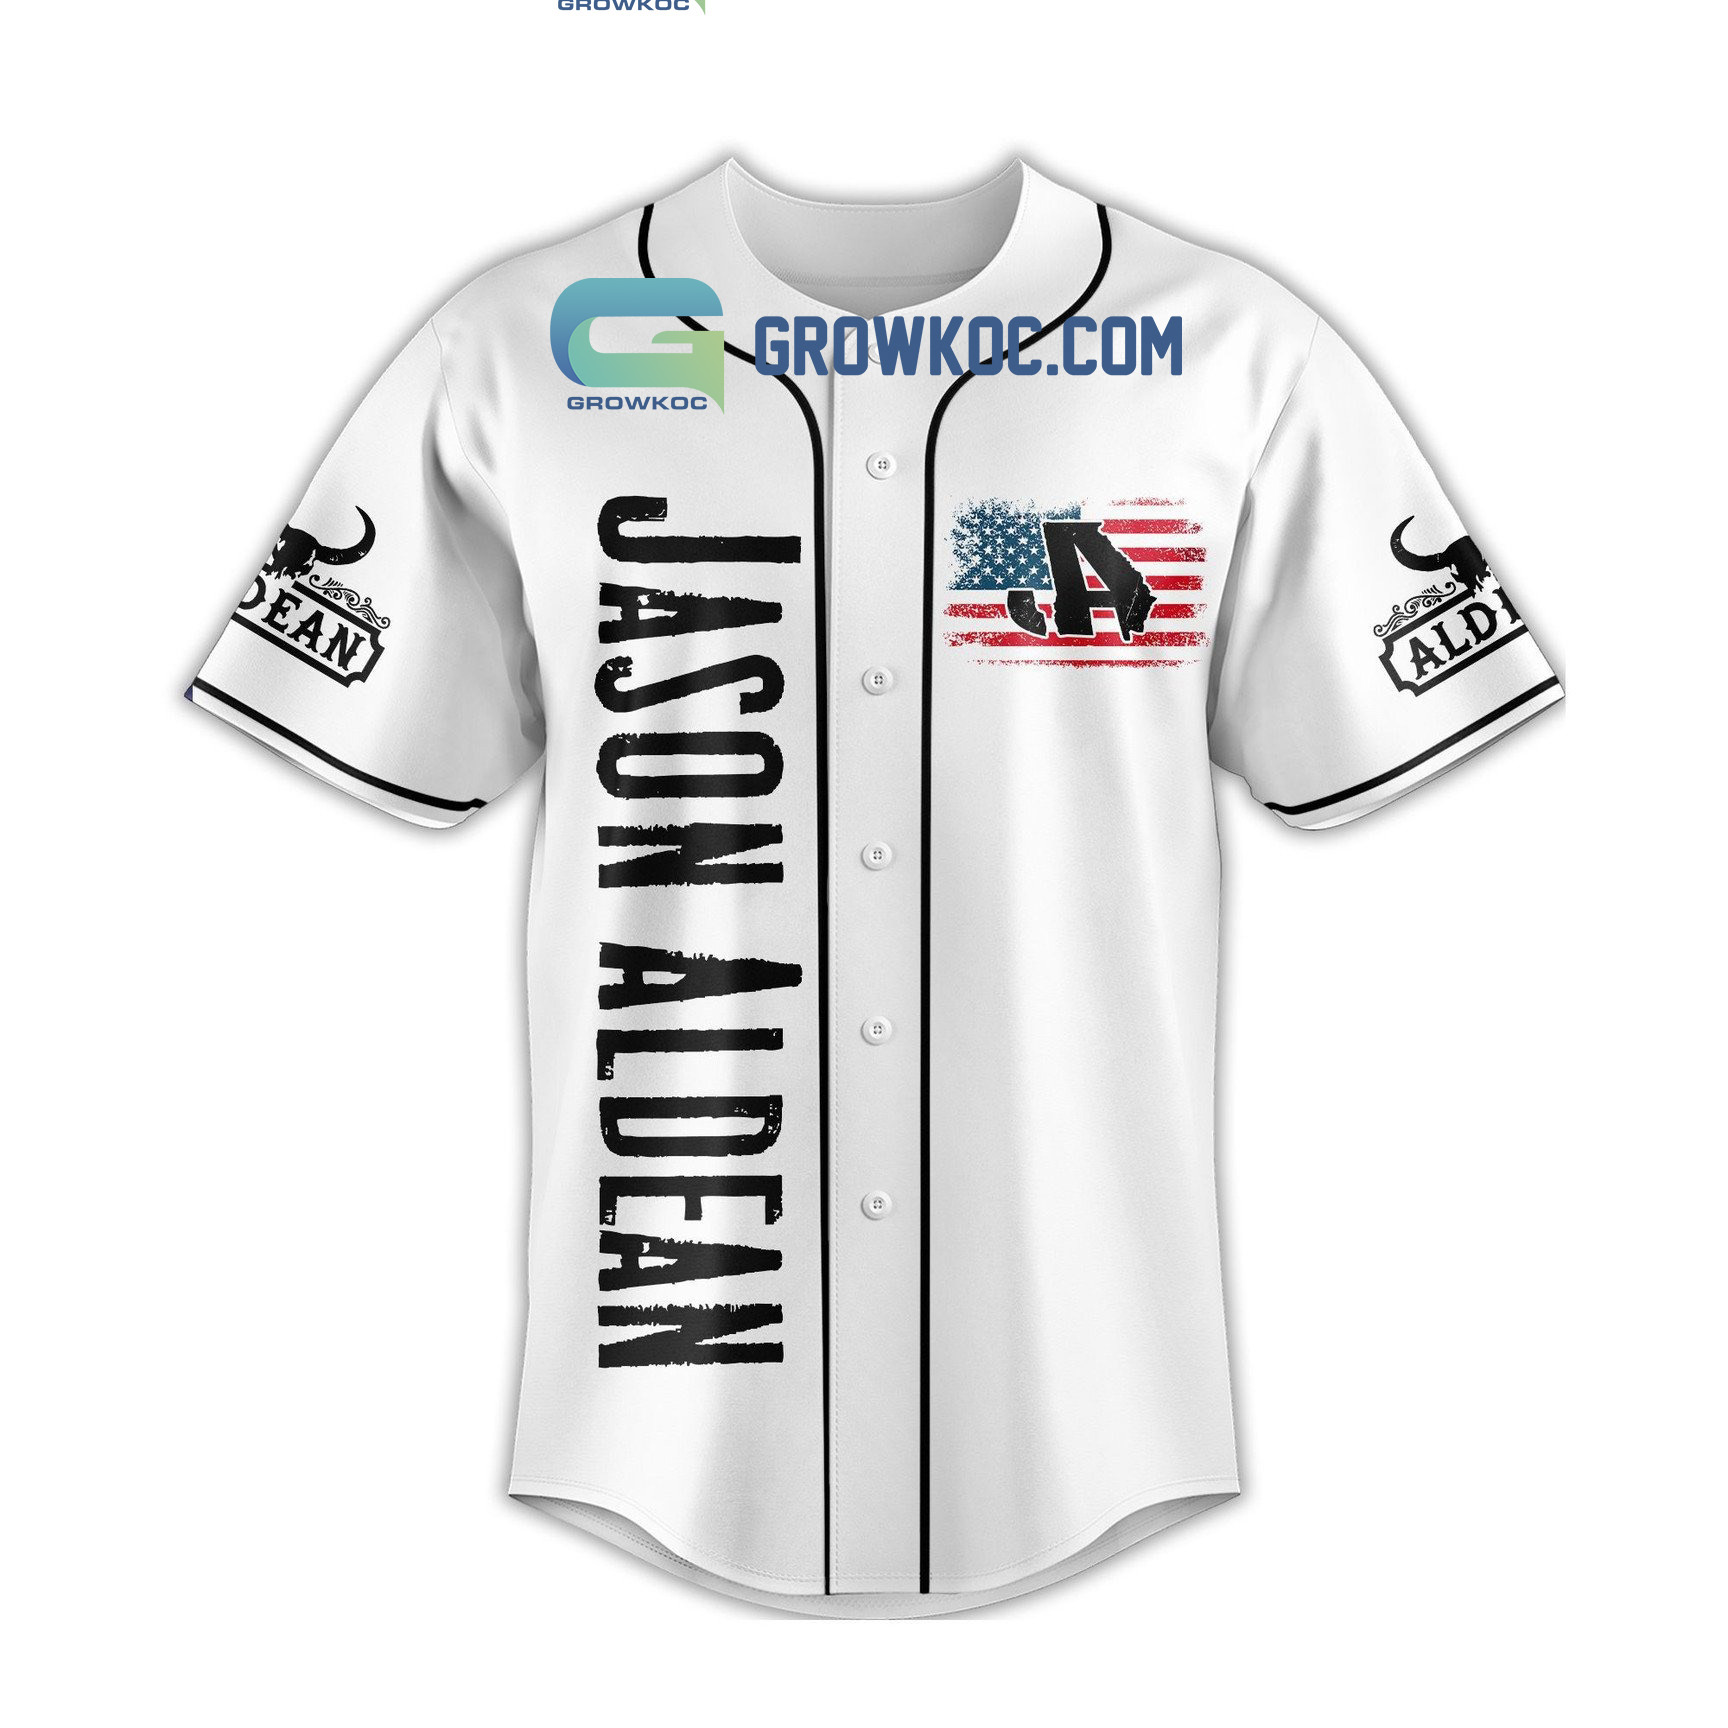 Jason Aldean Mitchell Tenpenny Highway Desperado Tour Personalized Baseball  Jersey - Growkoc